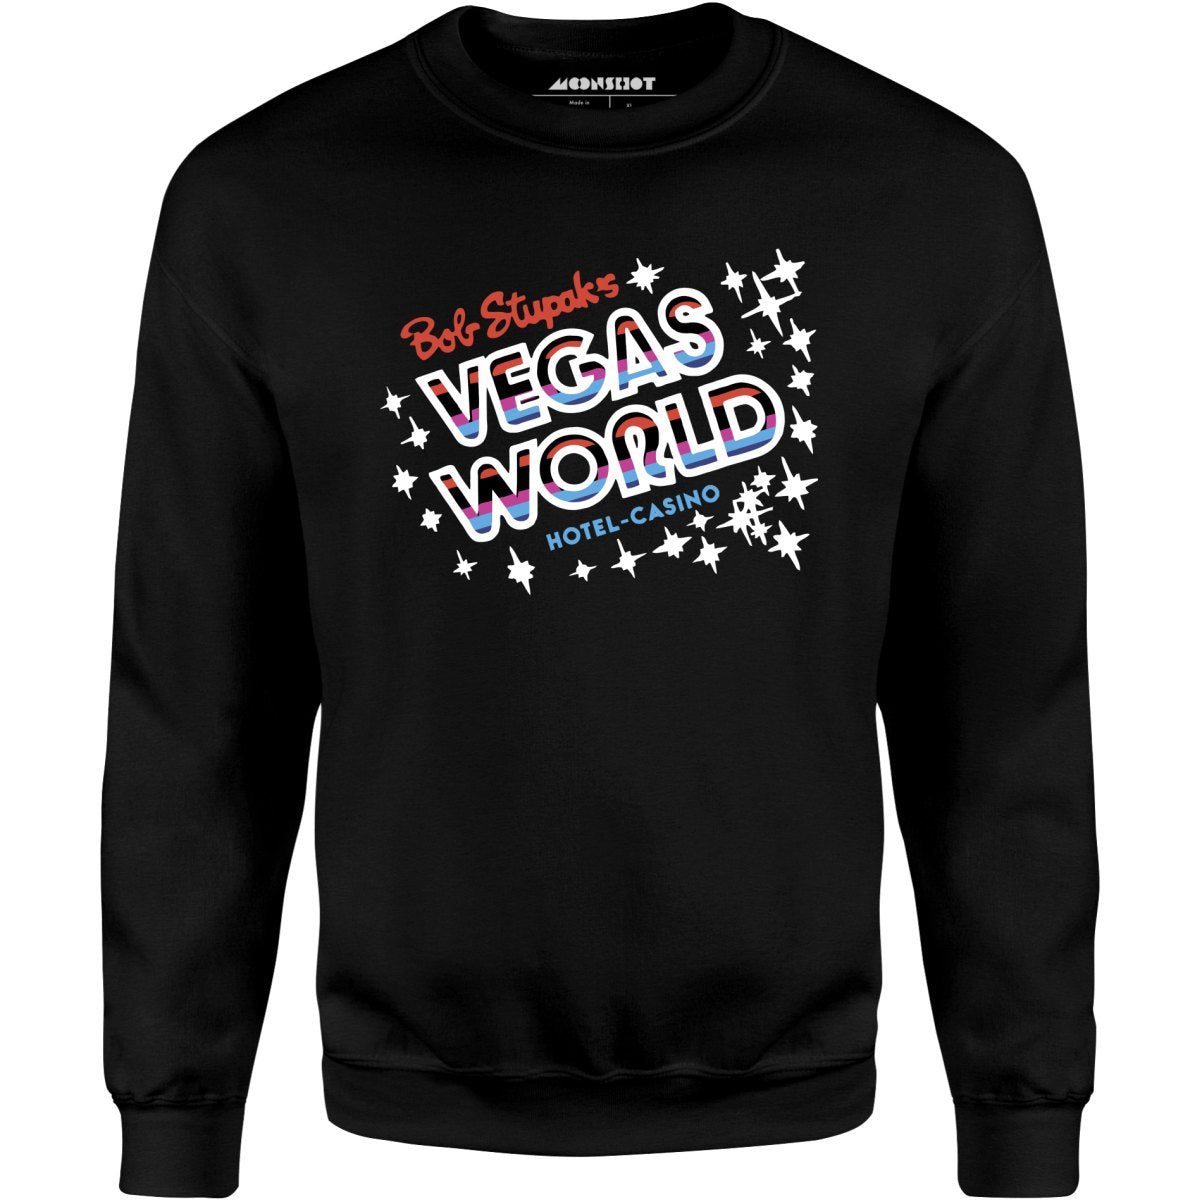 Bob Stupak's Vegas World - Vintage Las Vegas - Unisex Sweatshirt